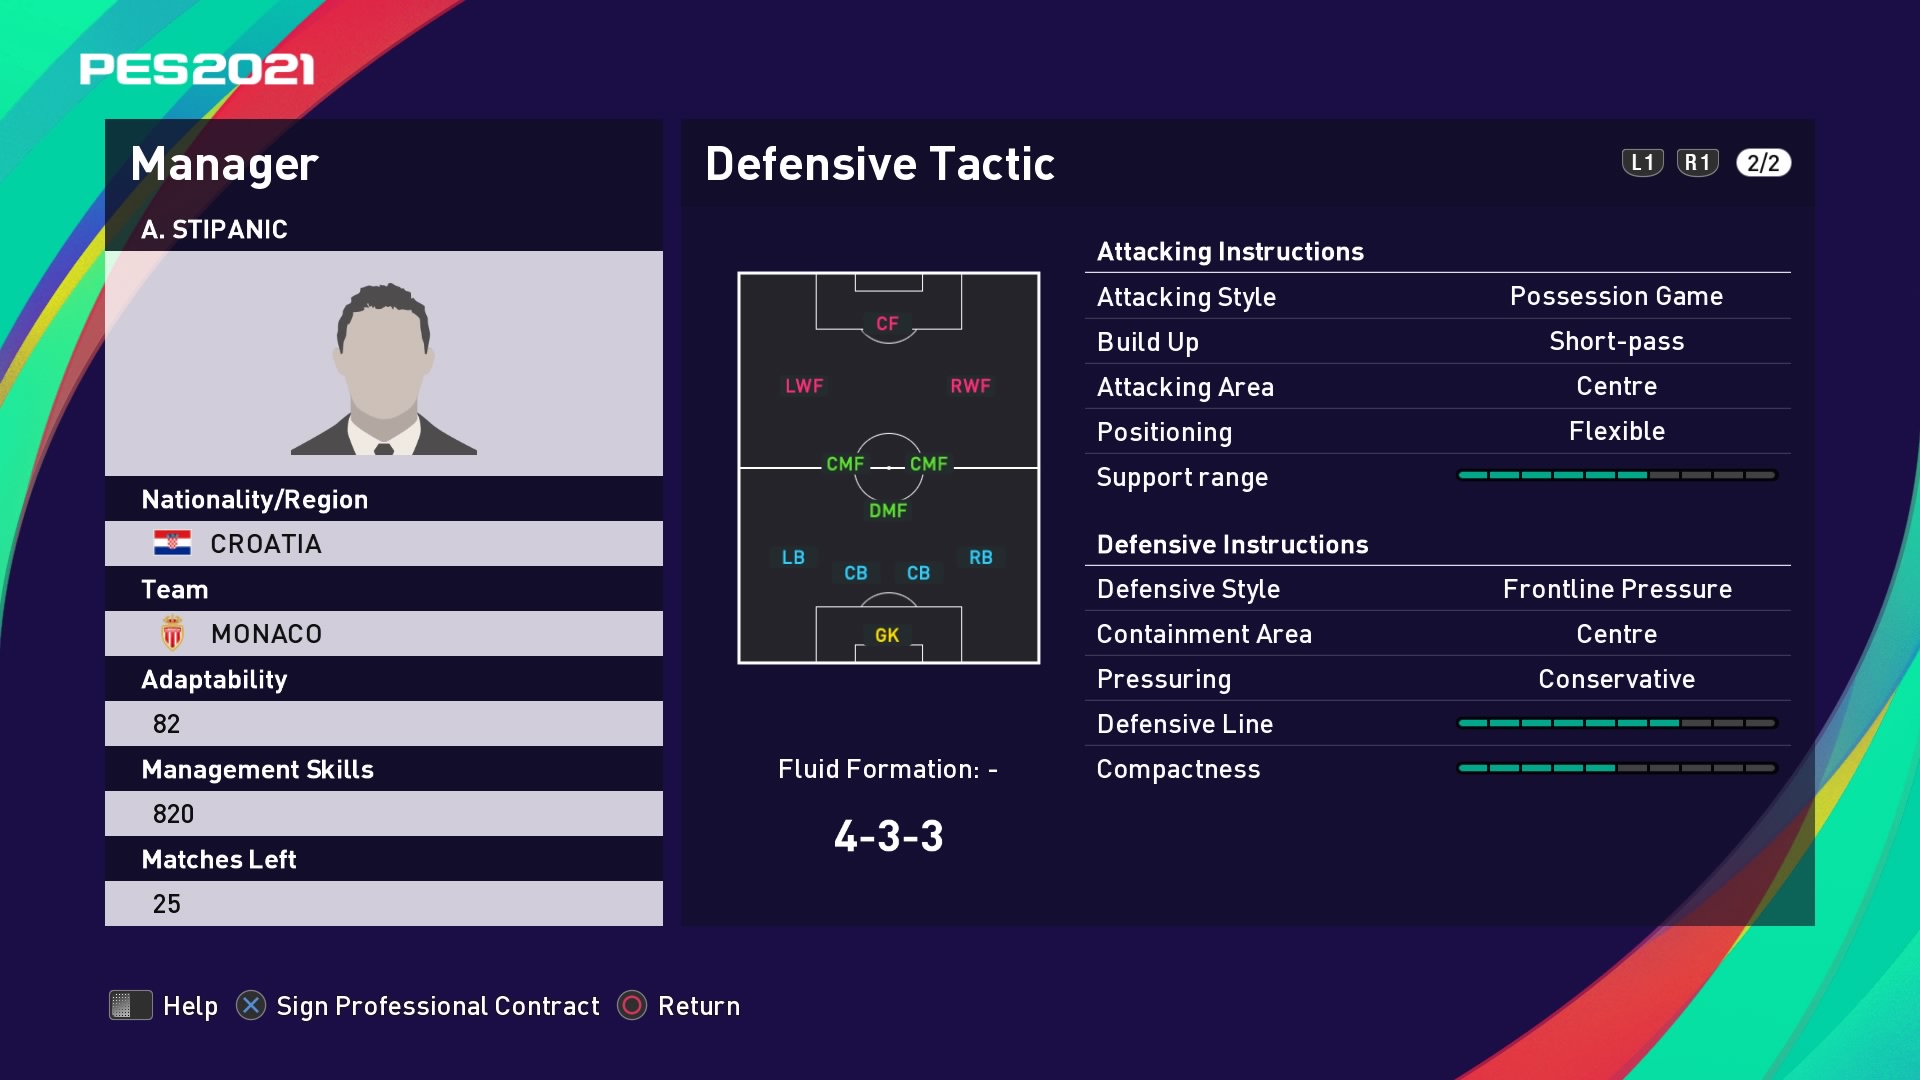 A. Stipanic (Niko Kovač) Defensive Tactic in PES 2021 myClub